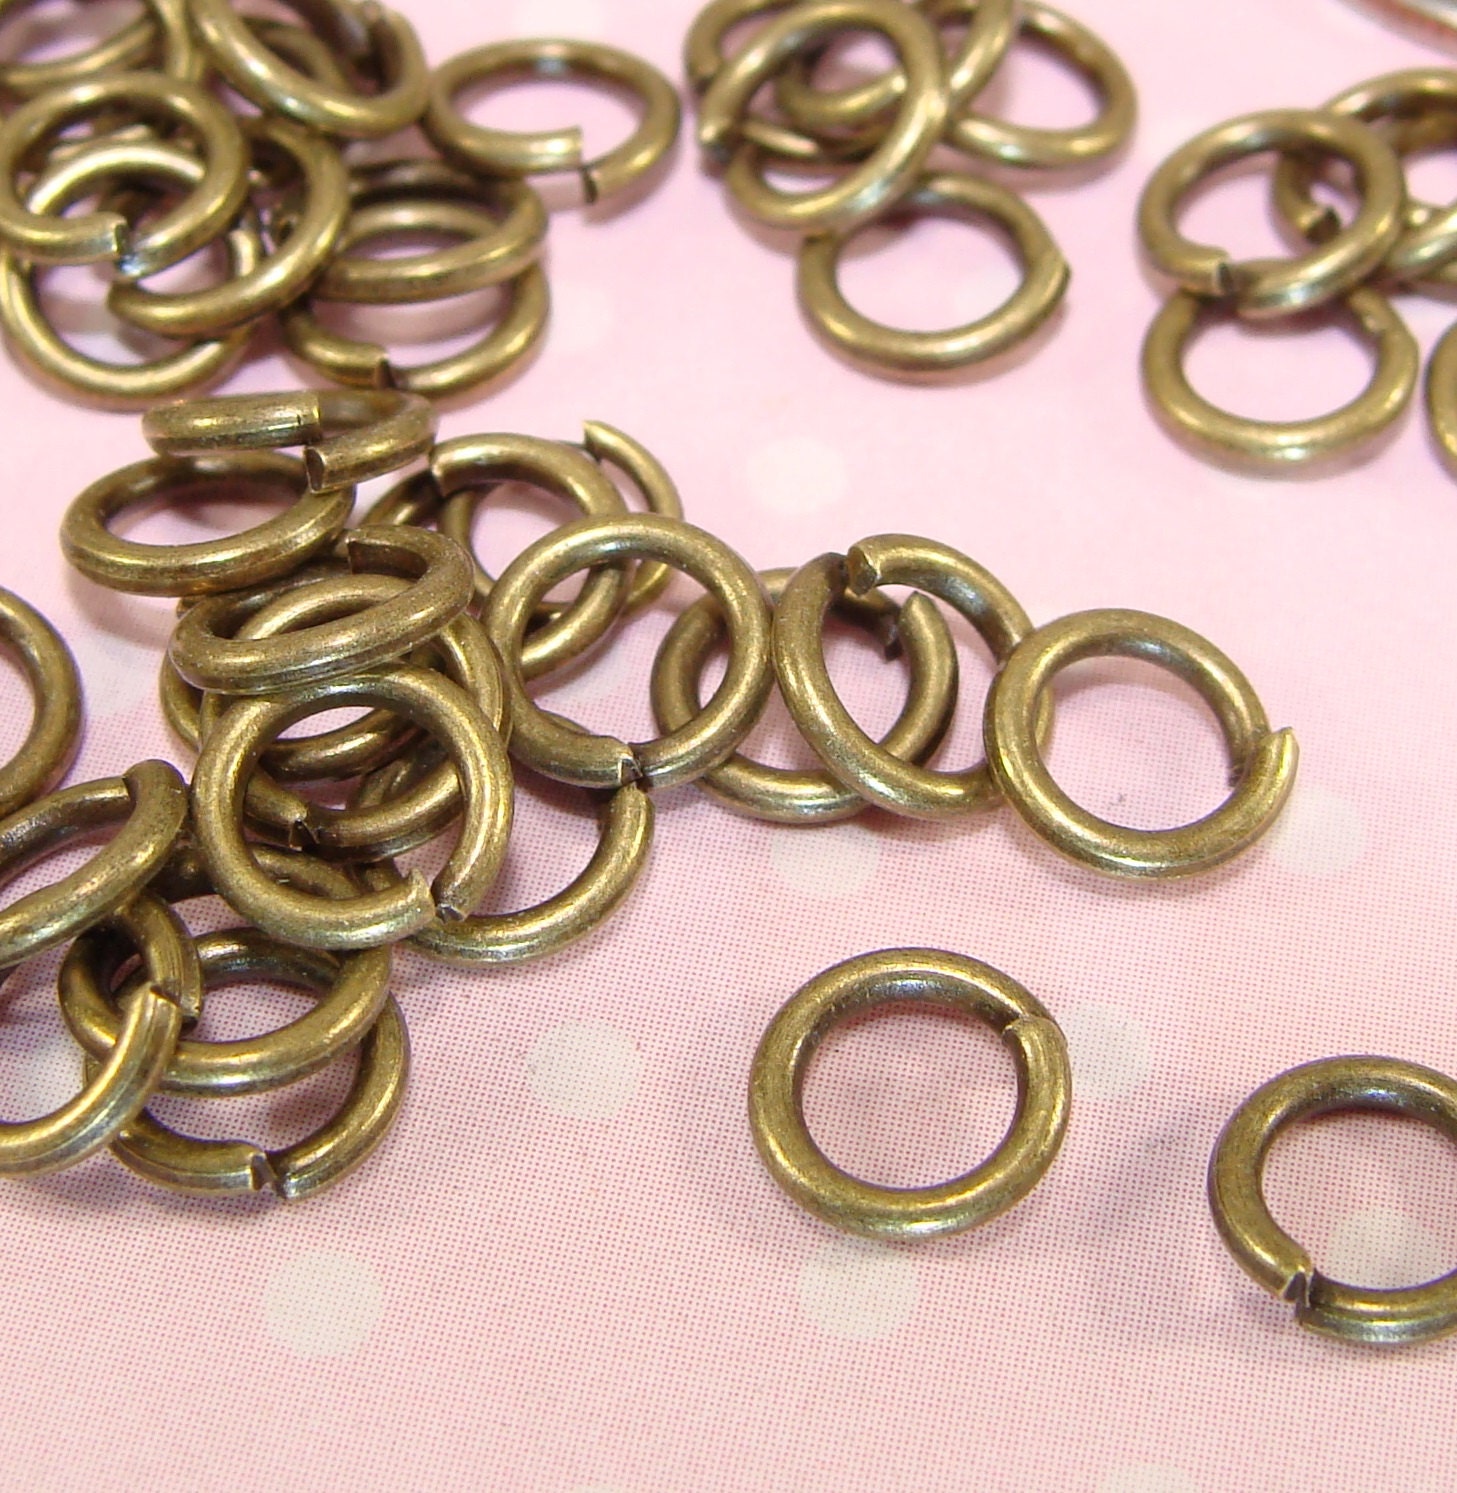 4mm 10 Piece 14k Gold Filled Jumplock Jump Ring Jewelry Making Supplies 